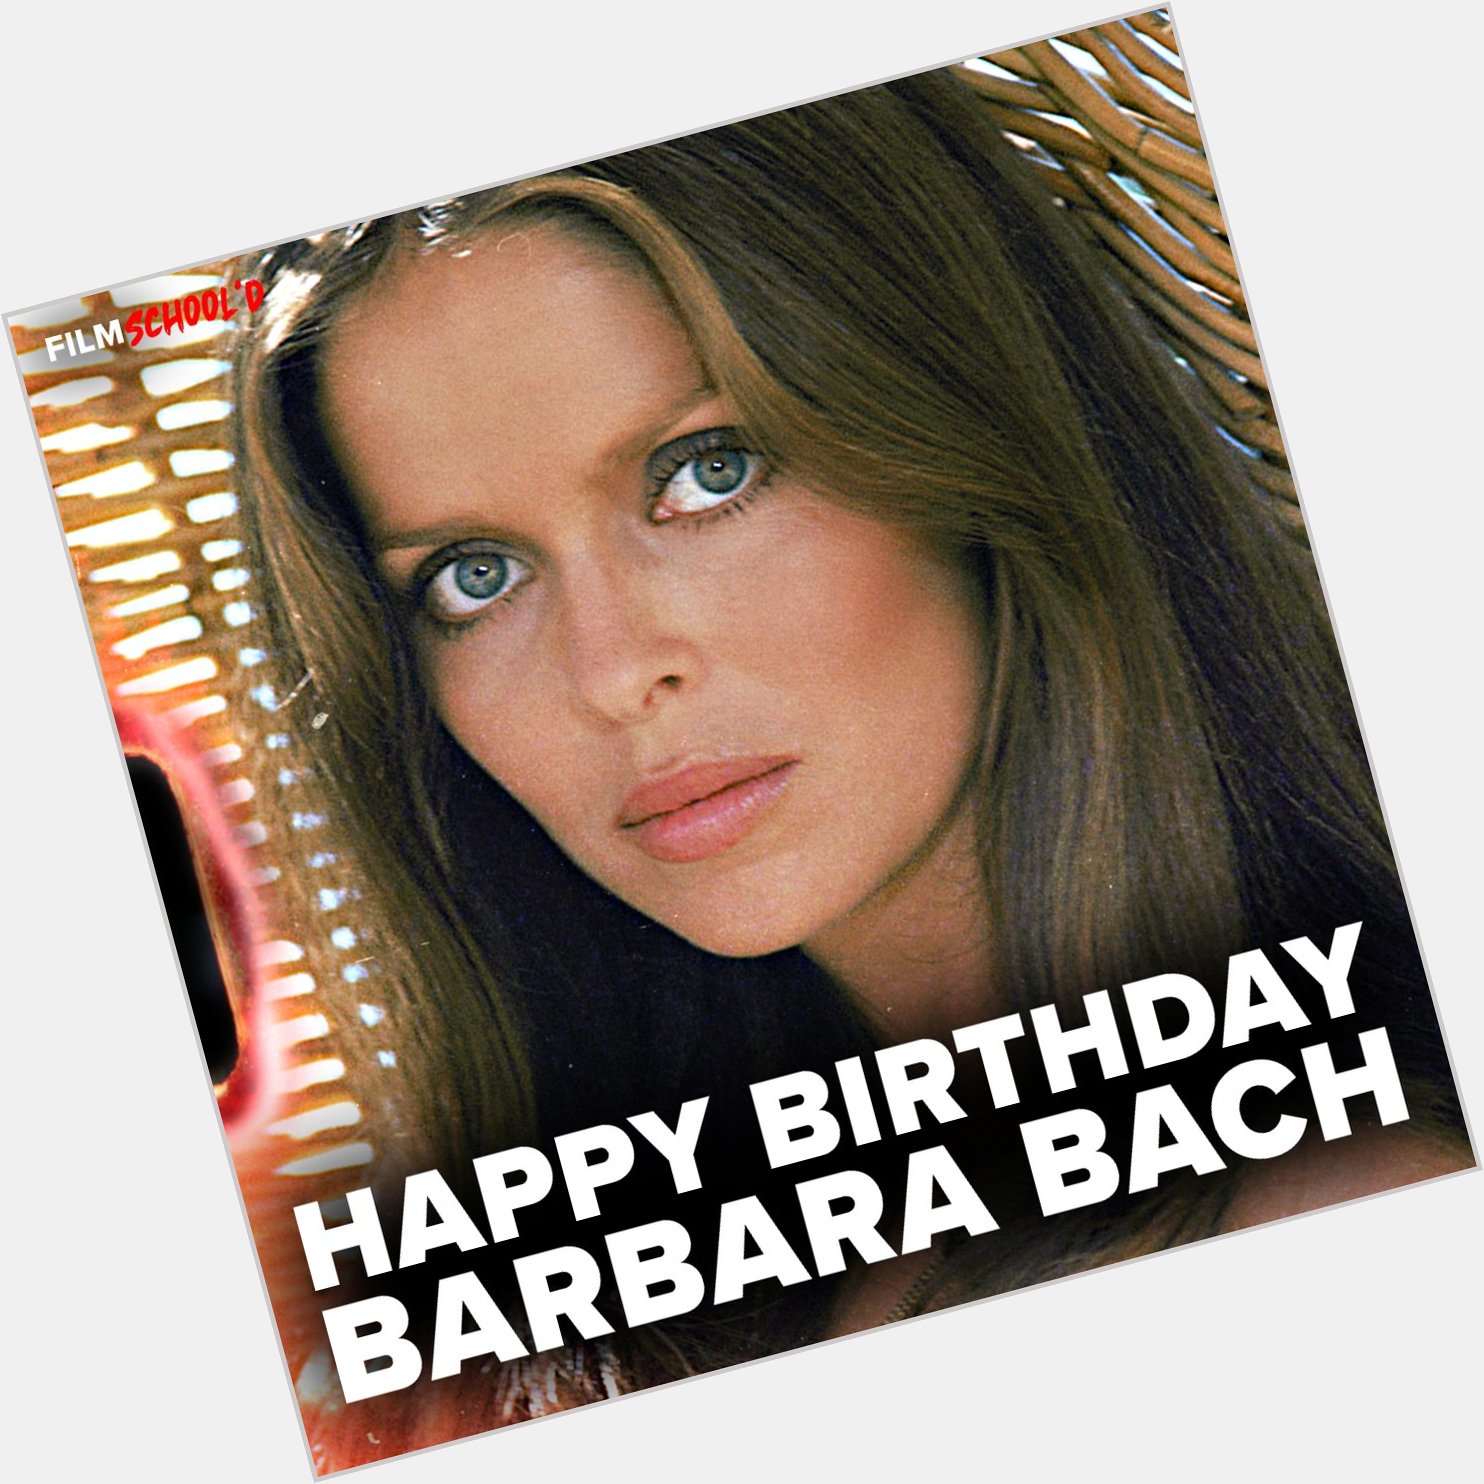 Happy birthday to the iconic Barbara Bach. 